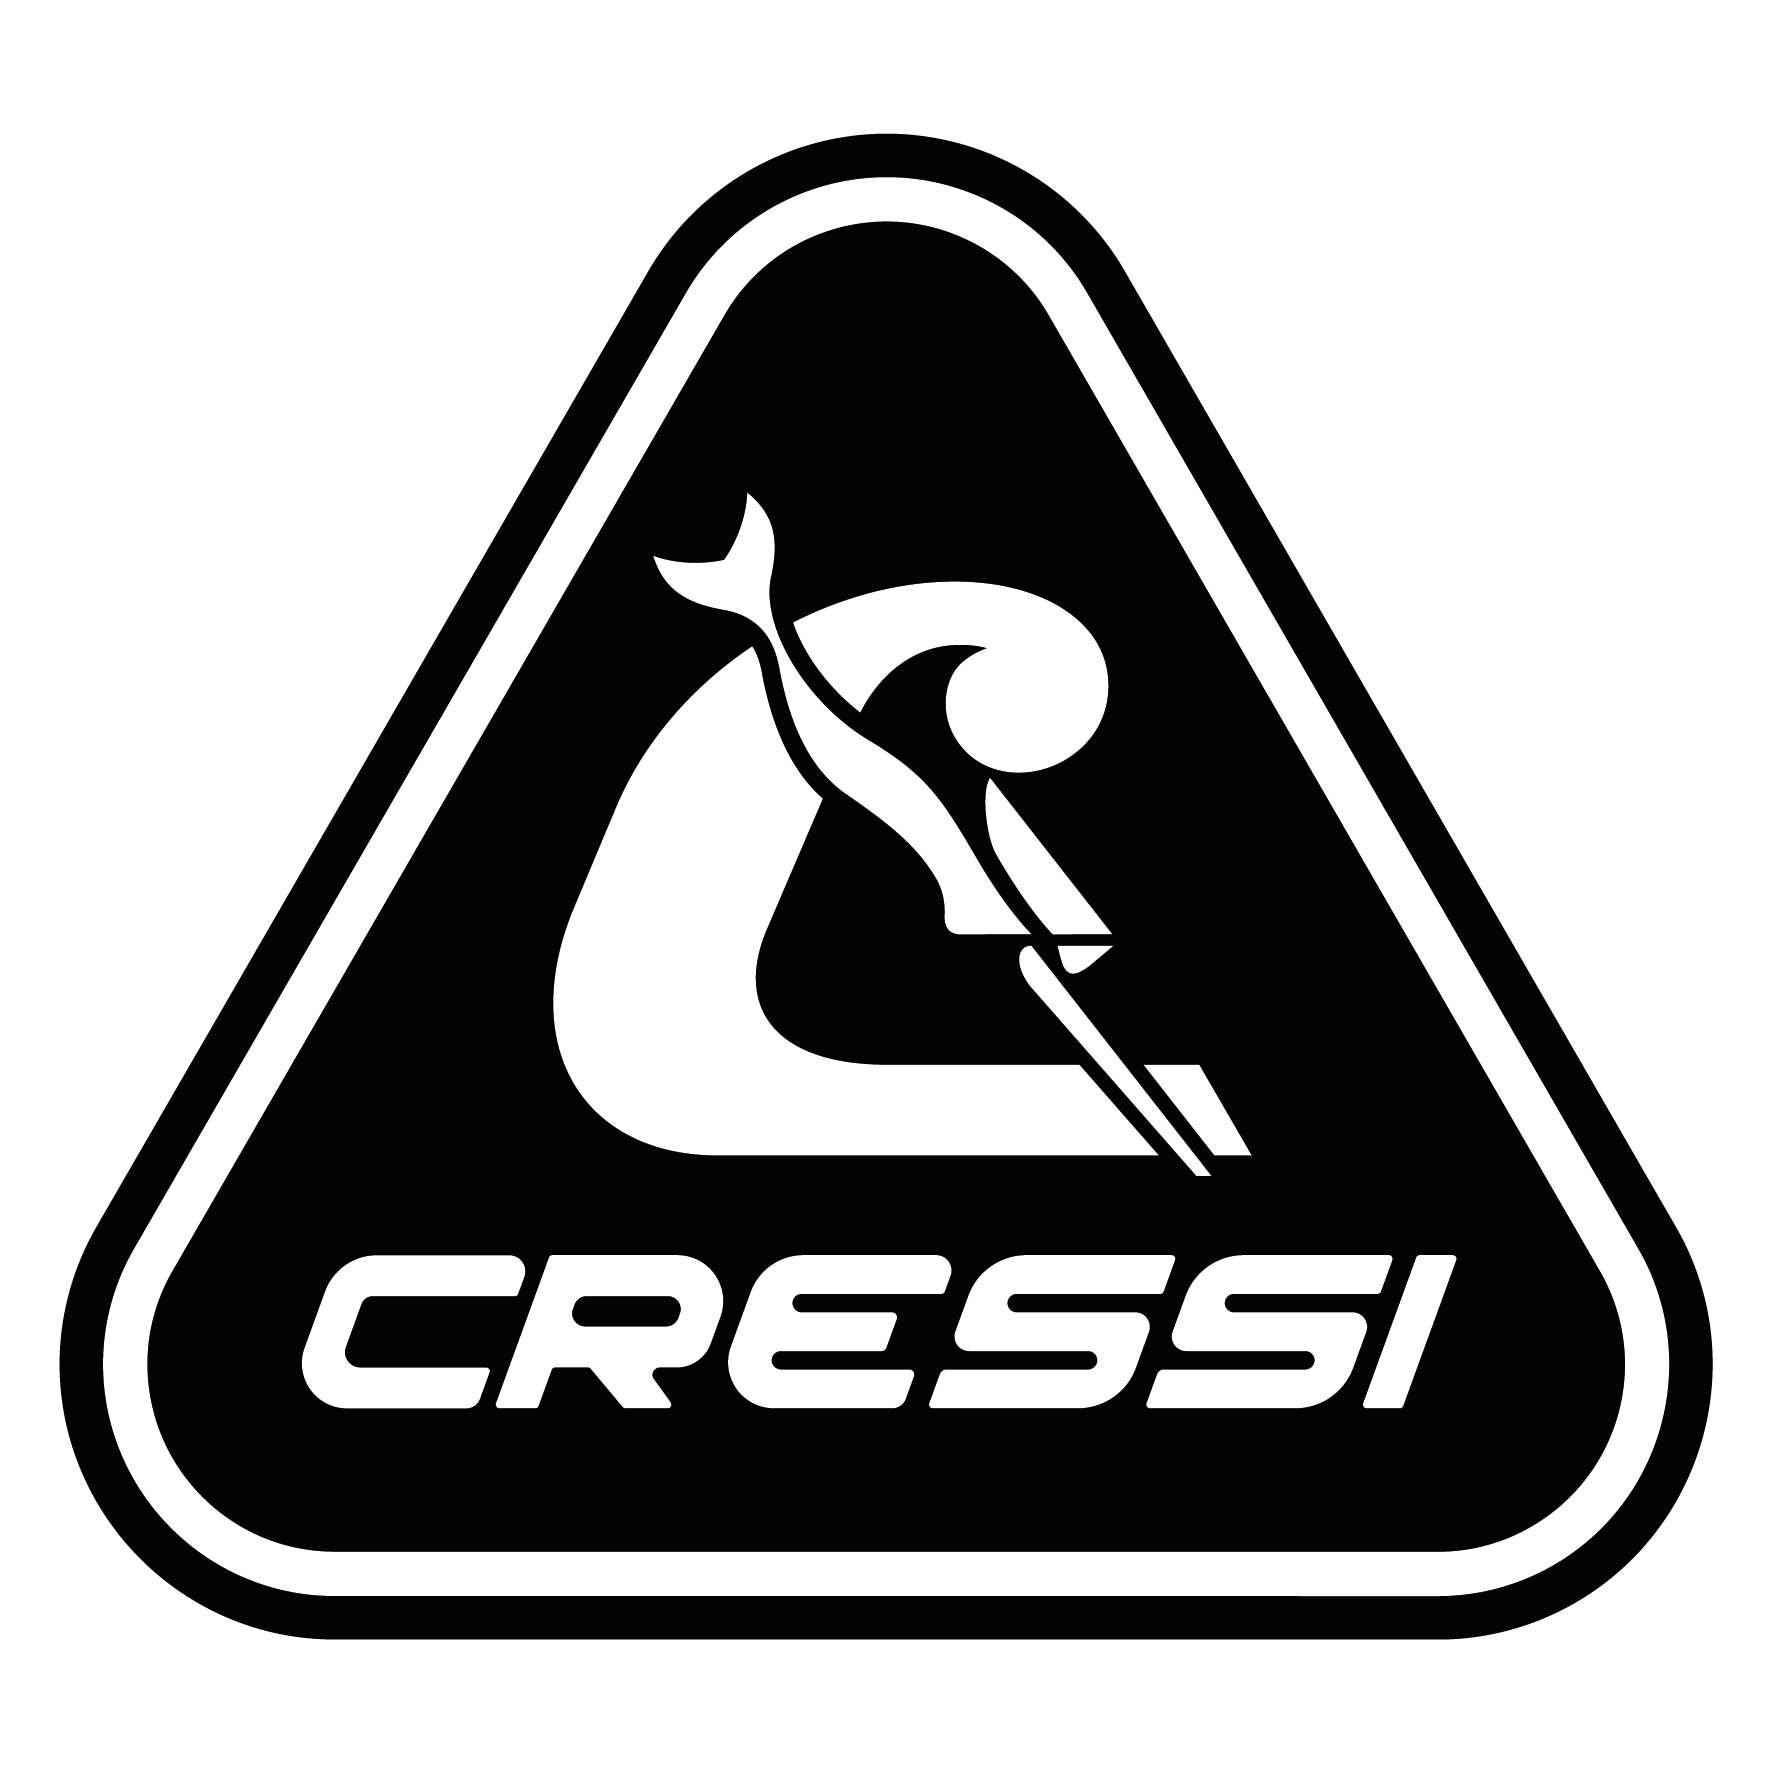 Cressi diving logo